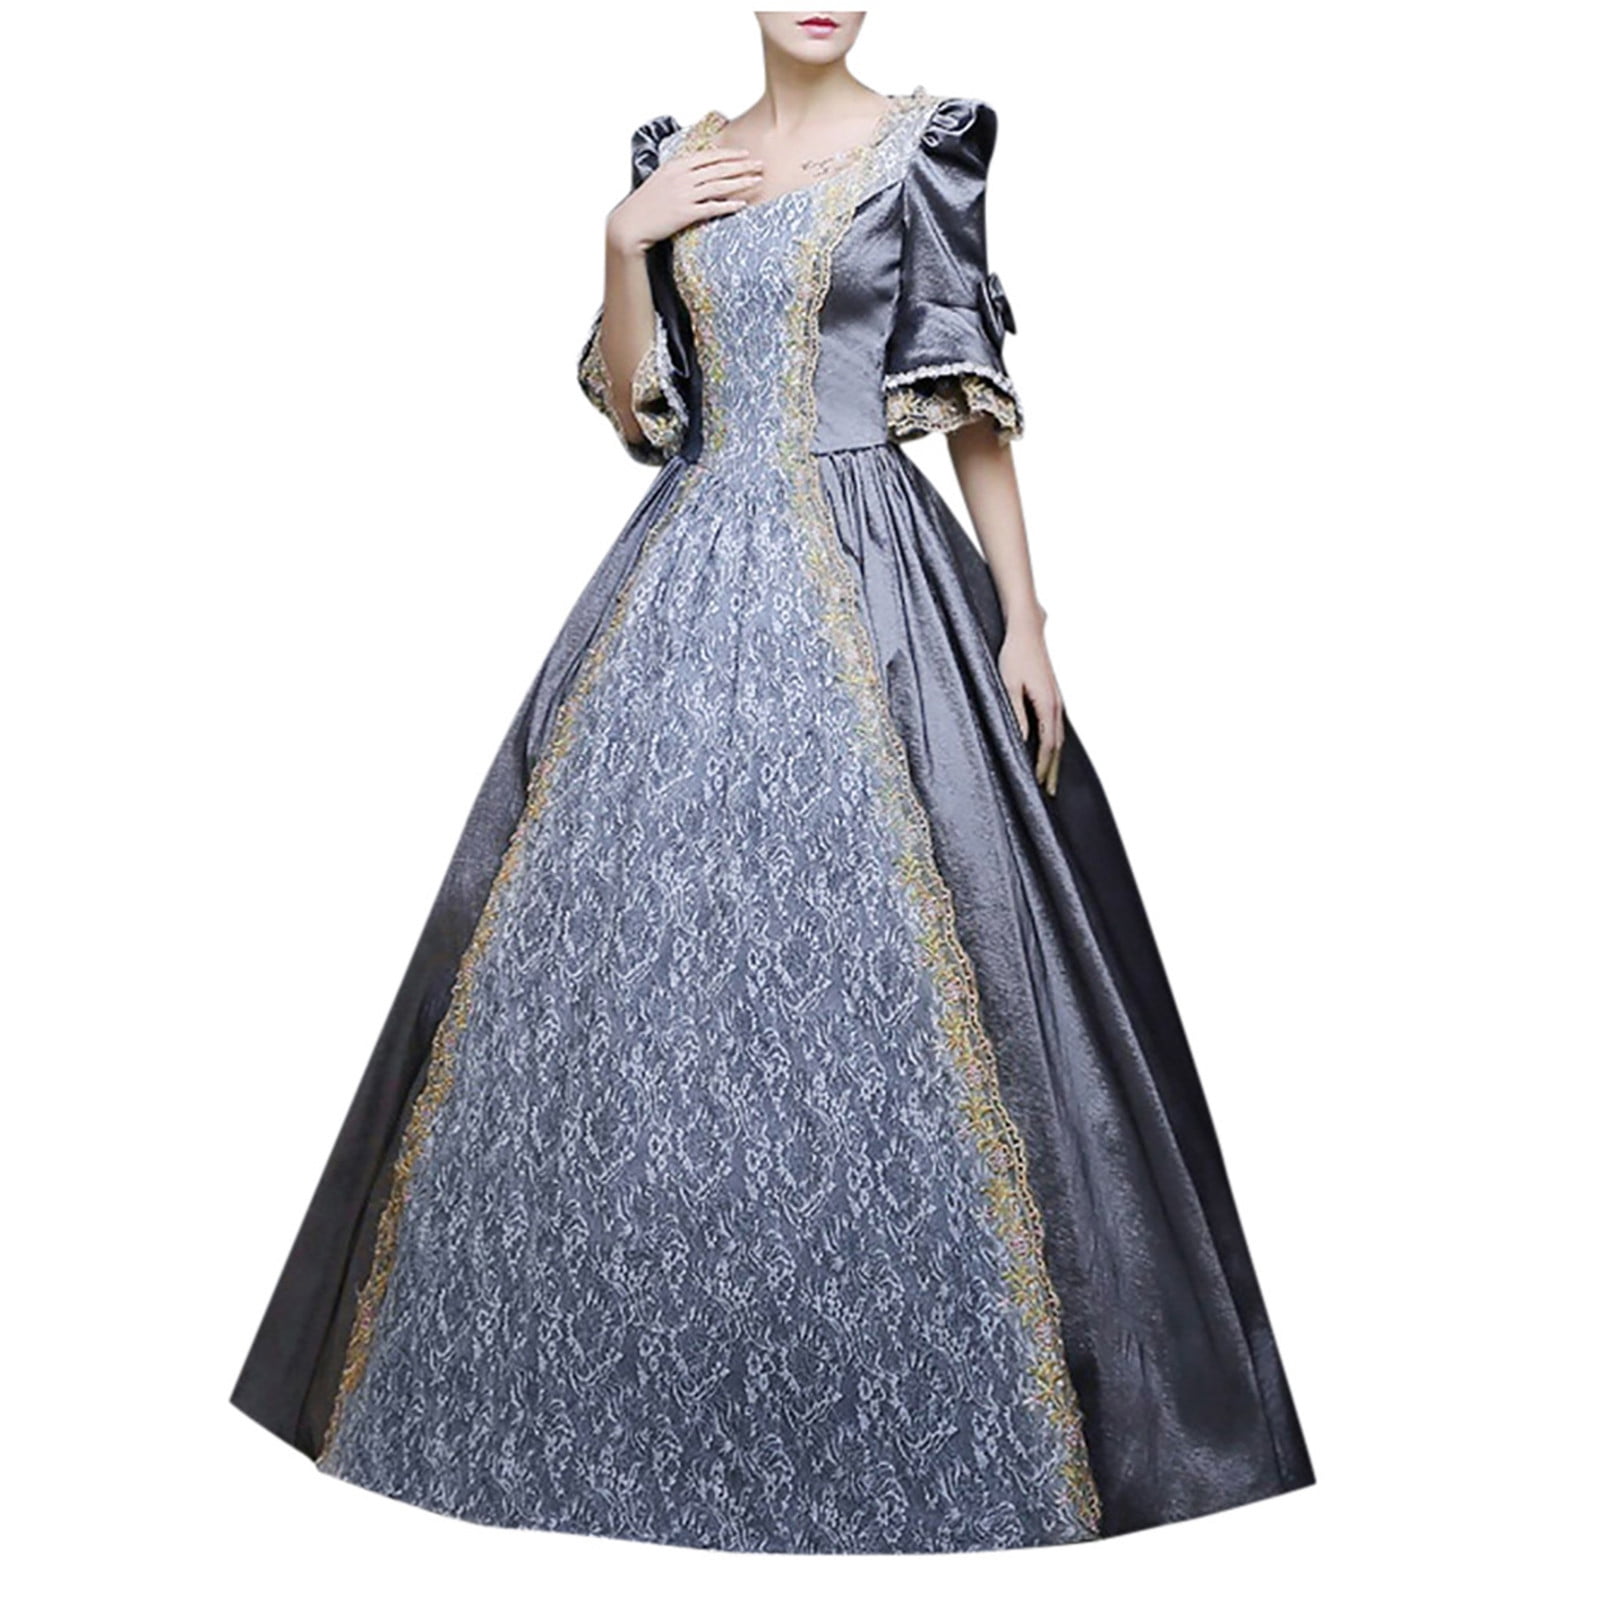 ball gown medieval princess dress